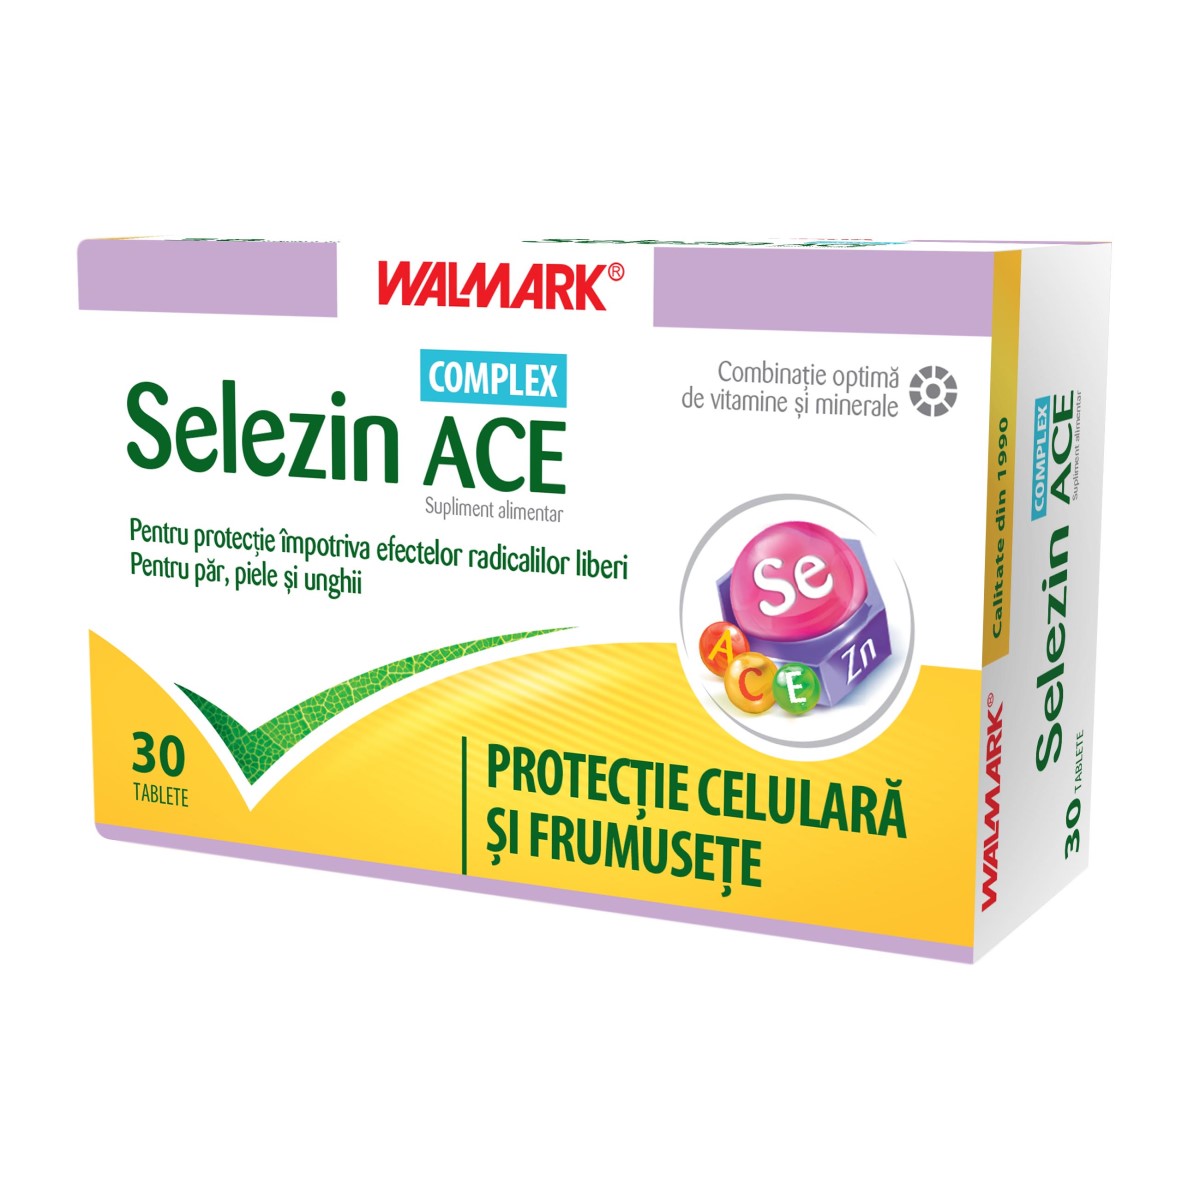 Multivitamine si minerale - Walmark Selezin ACE Complex x 30 comprimate, medik-on.ro